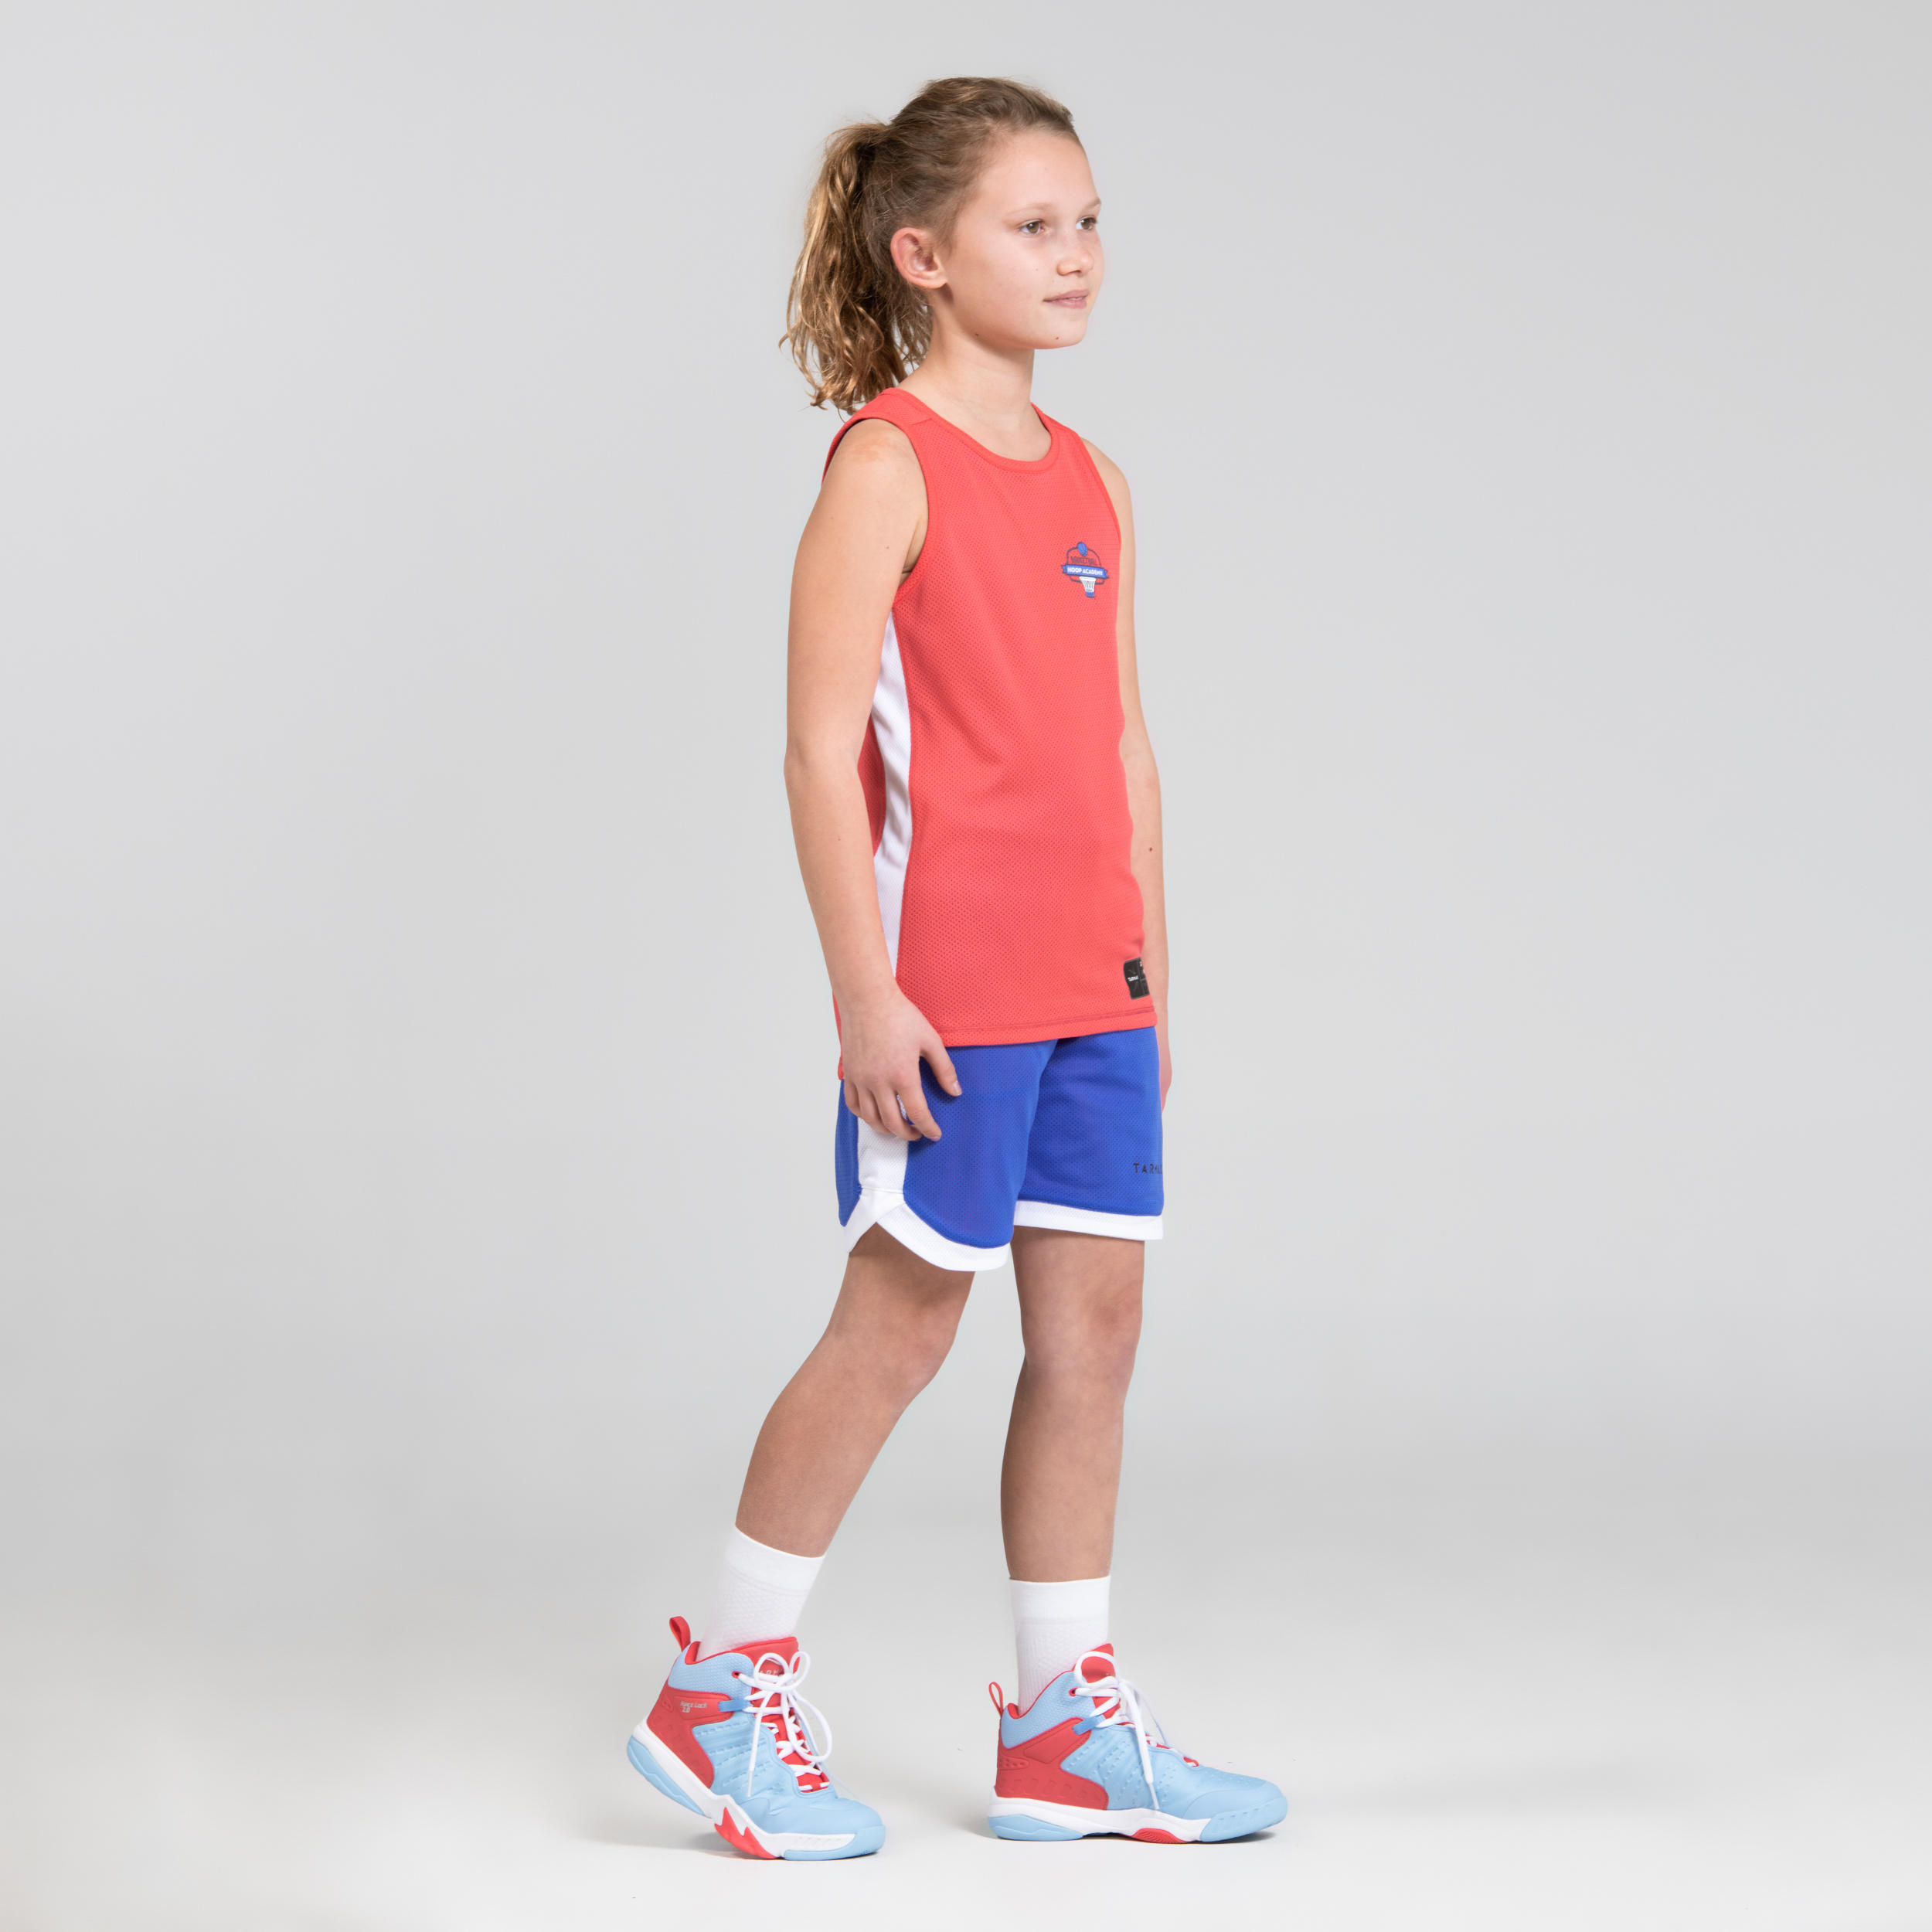 Boys'/Girls' Intermediate Reversible Basketball Shorts SH500R - Pink/Blue 5/5